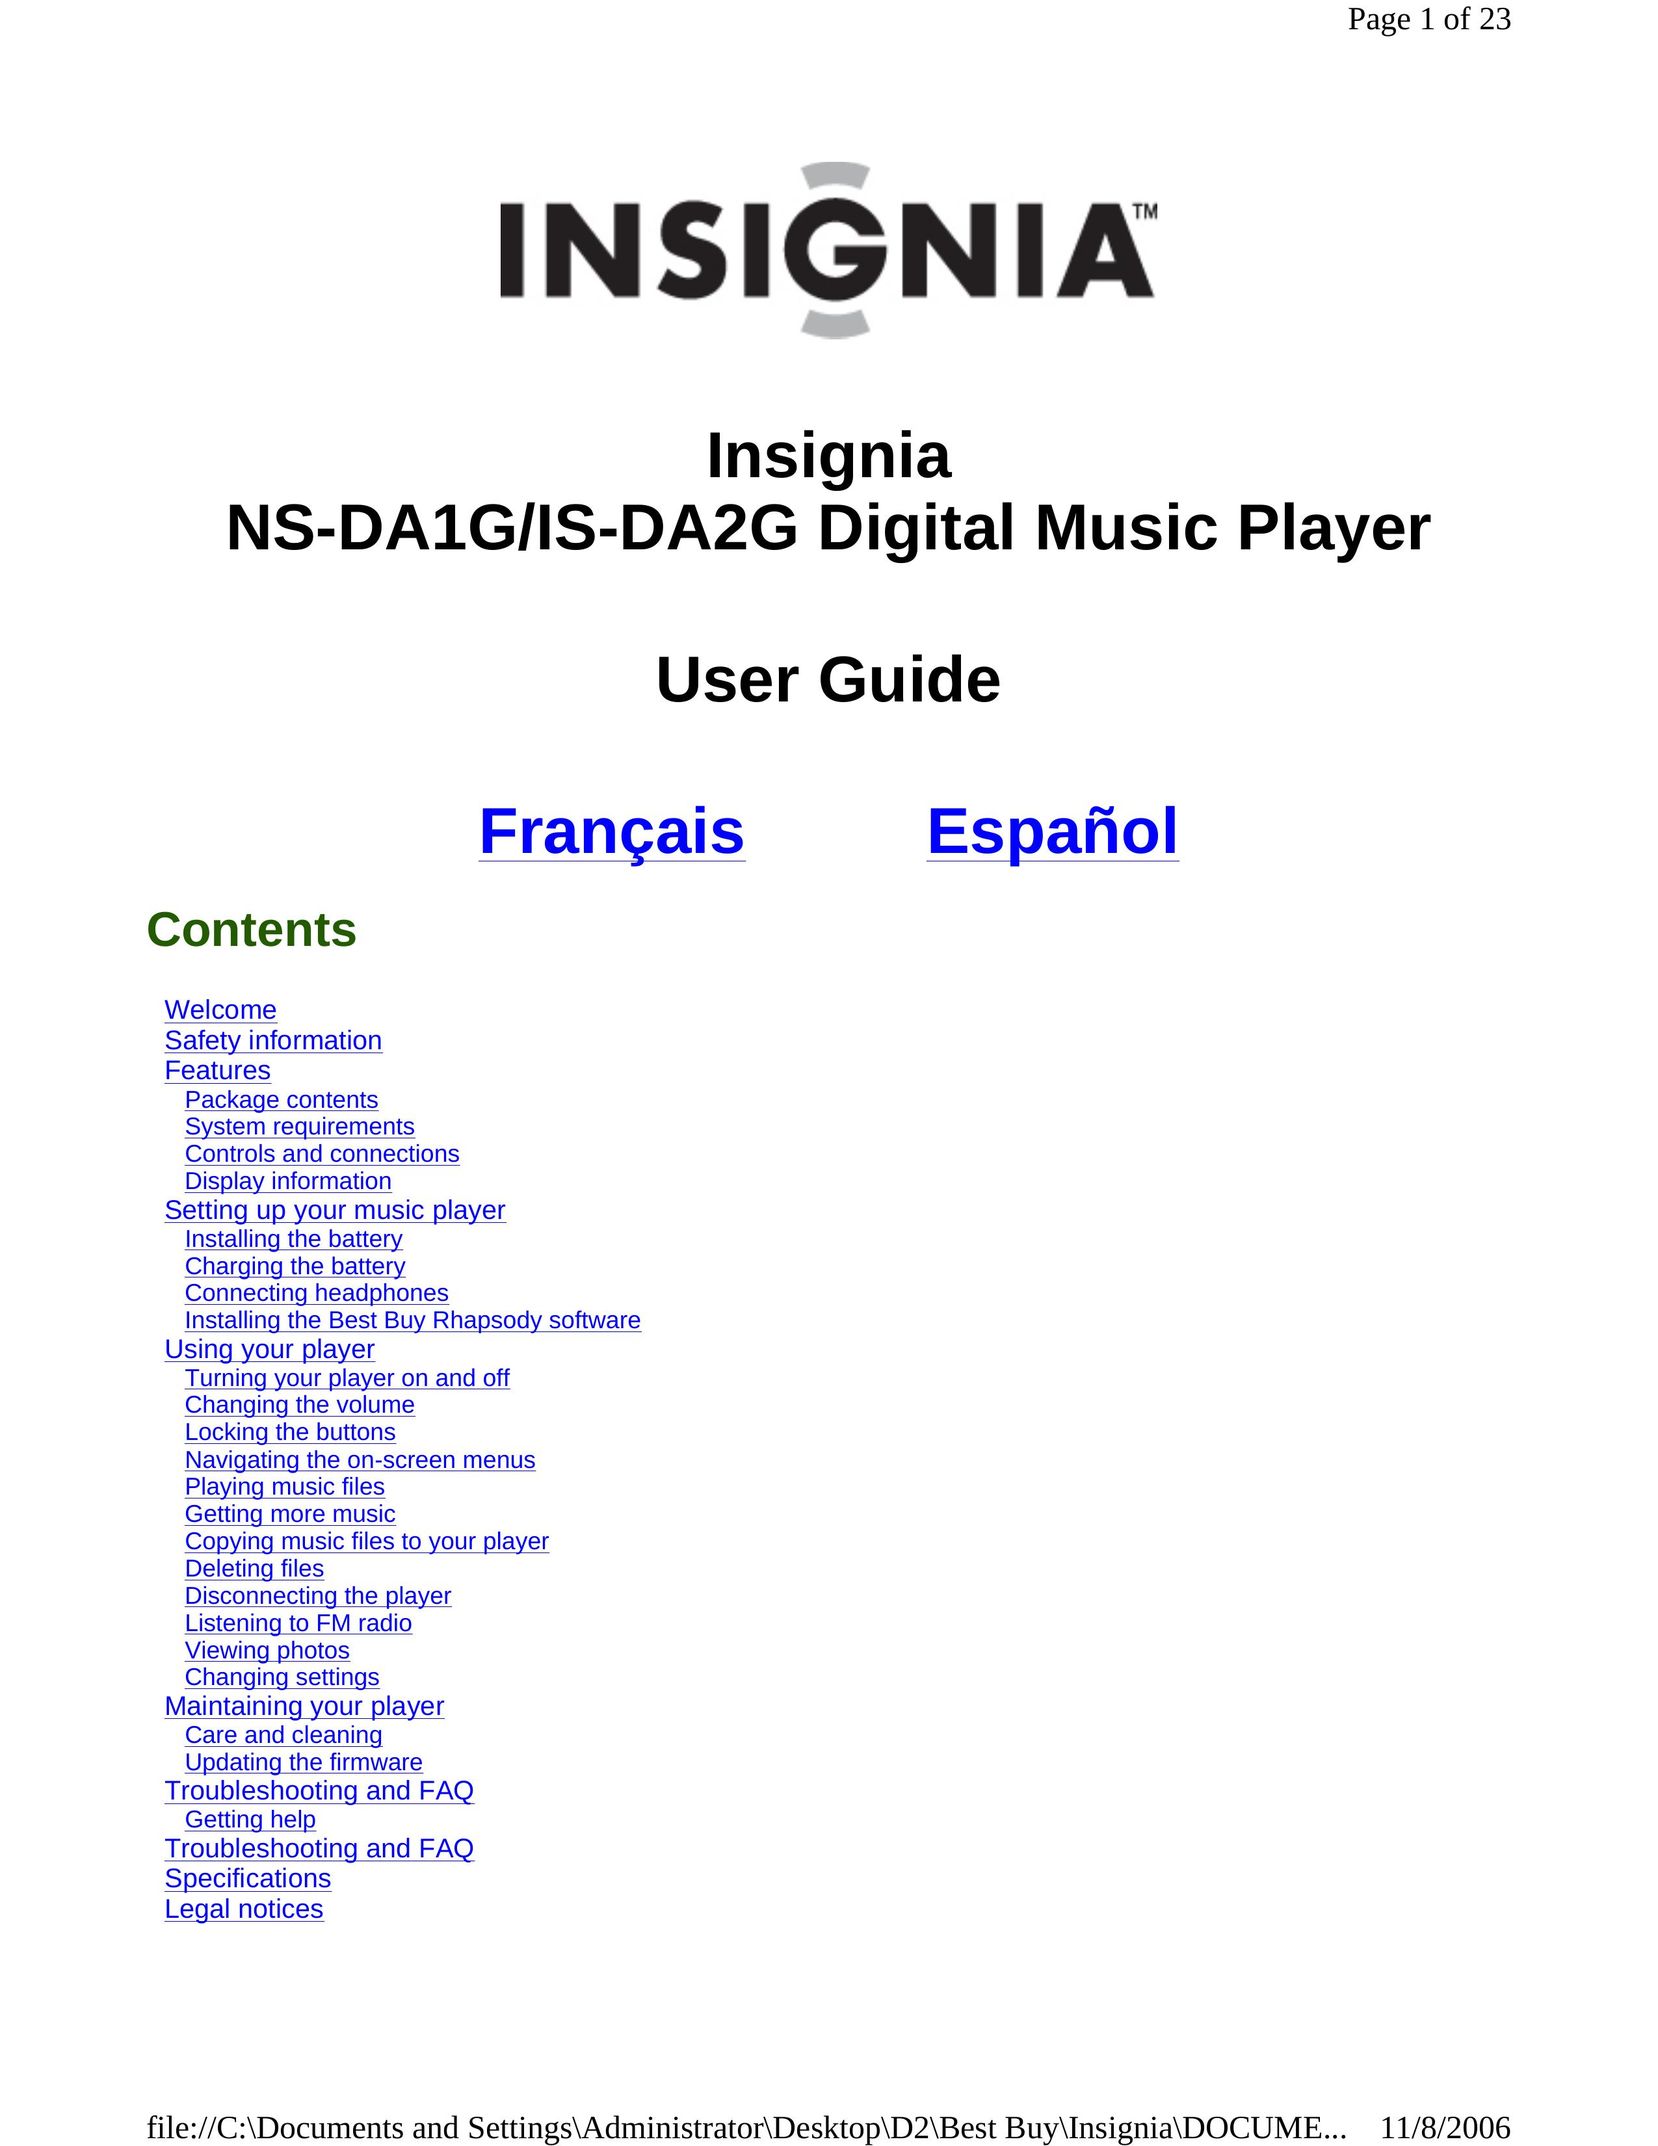 Insignia IS-DA2G CD Player User Manual